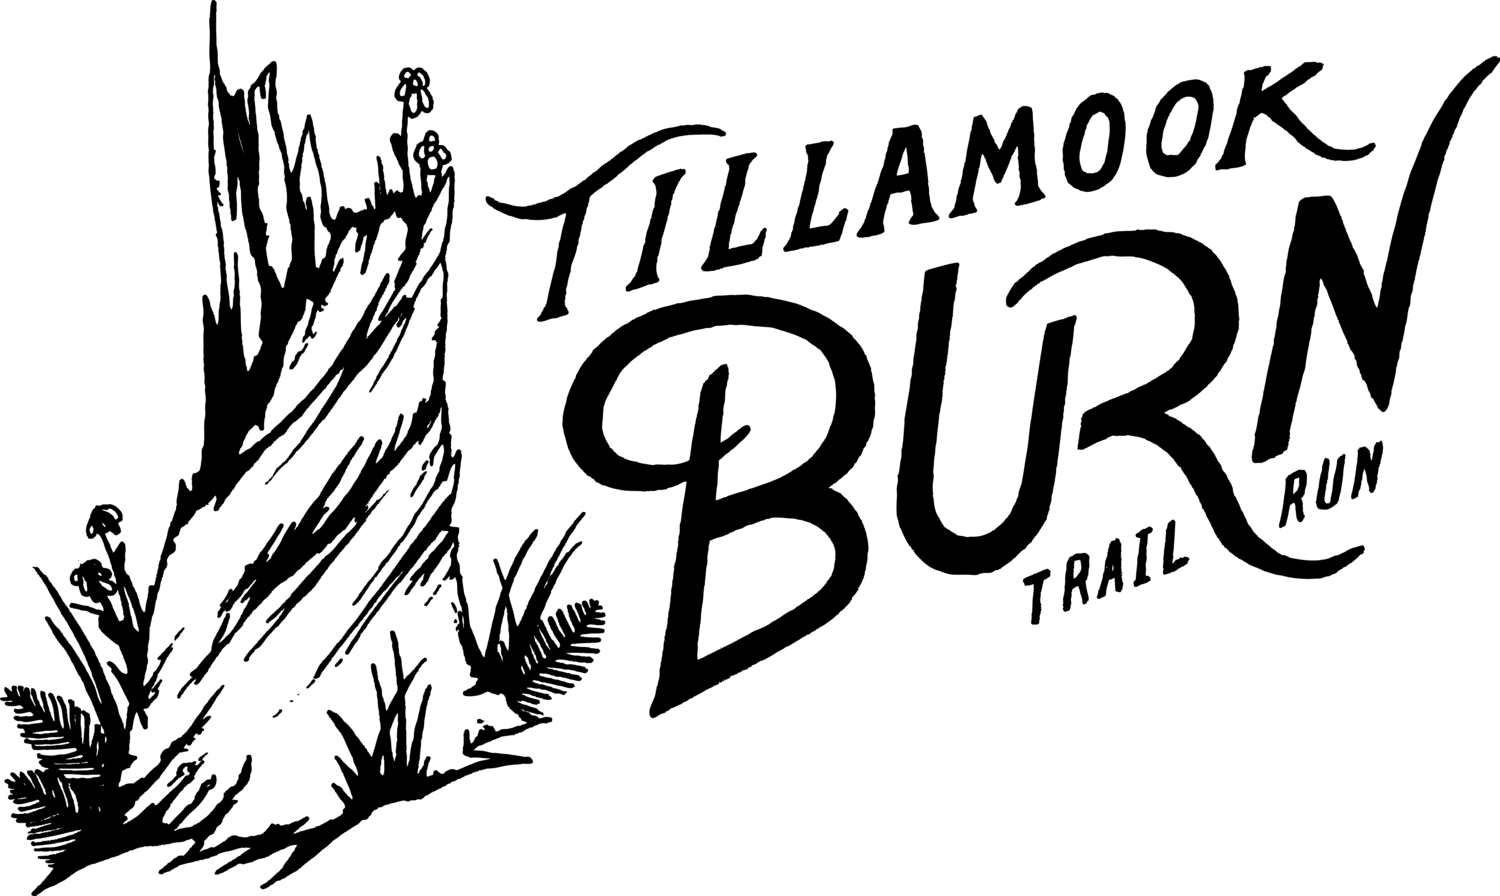 Tillamook Burn 50K Trail Run logo on RaceRaves